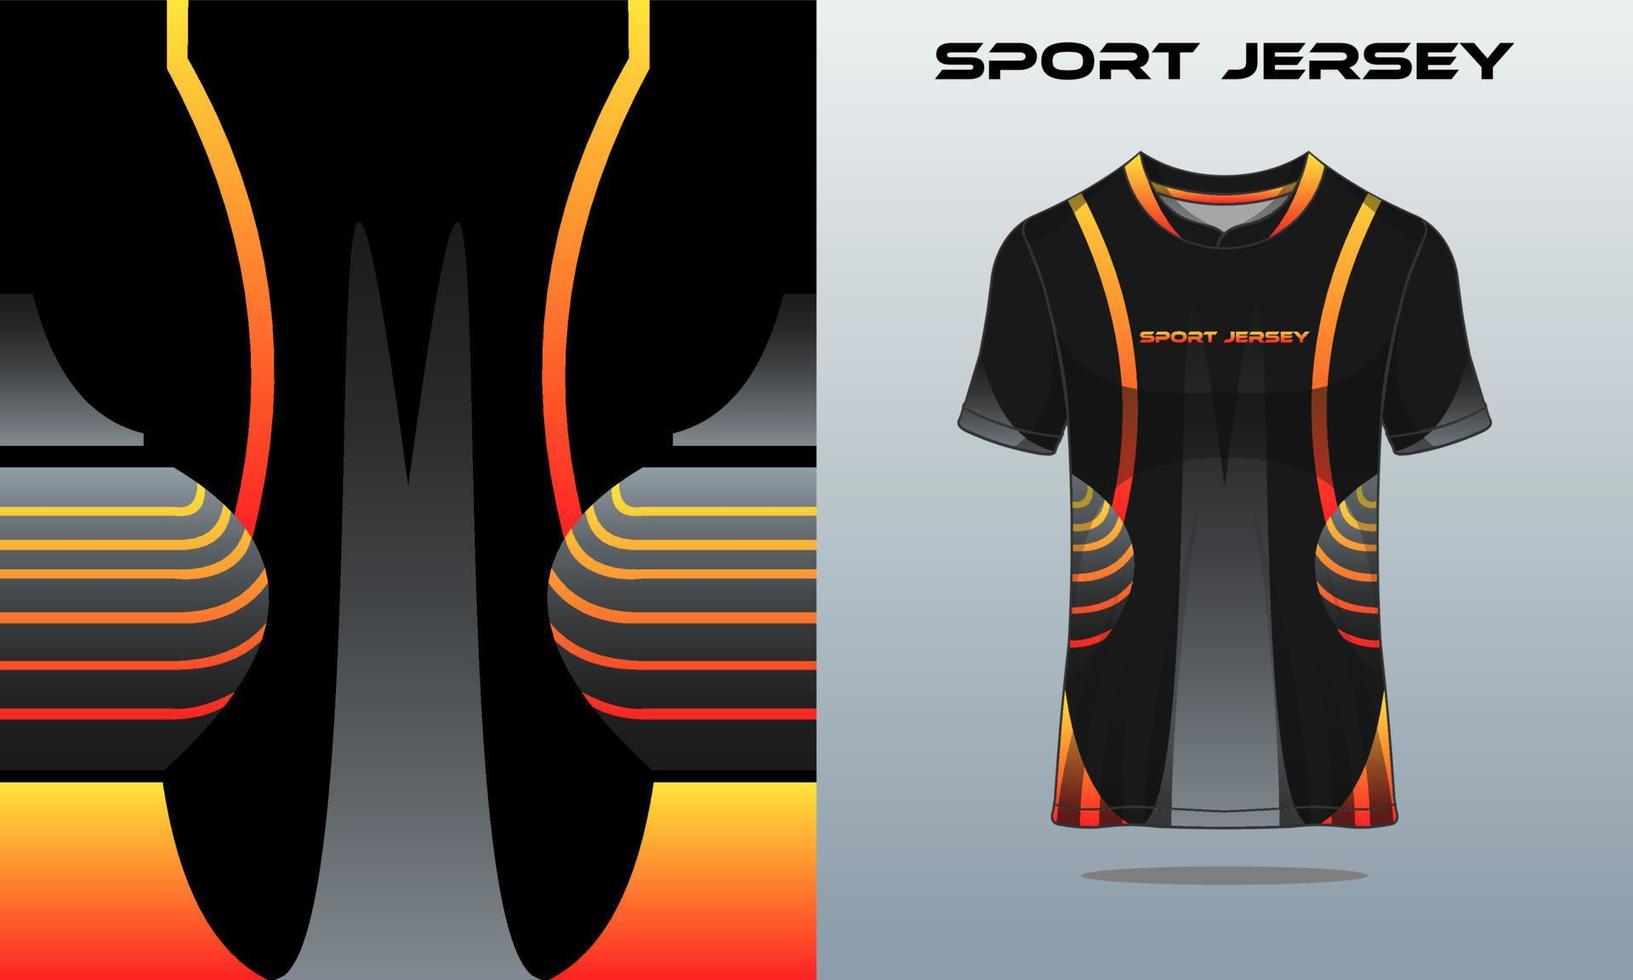 tshirt sports abstrac texture footbal design for racing football gaming motocross gaming cycling vecteur